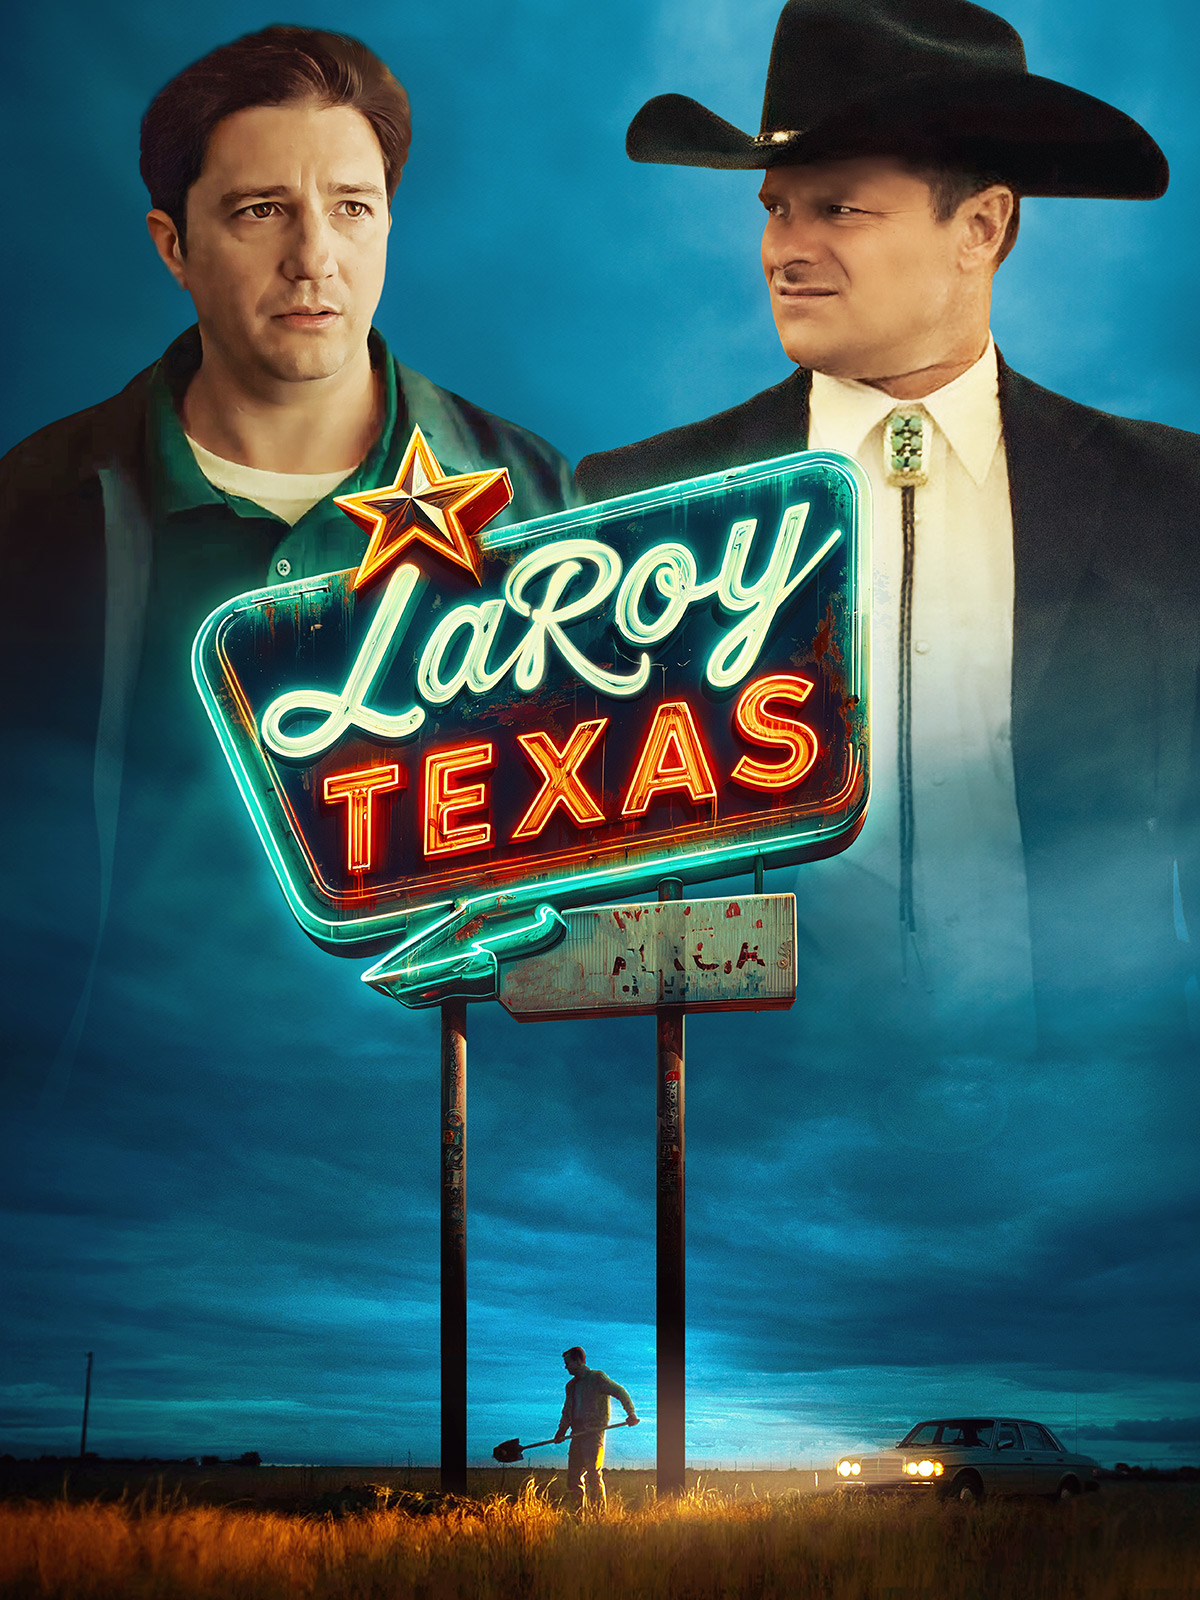 LaRoy Texas Press Release Moviehooker Movie News